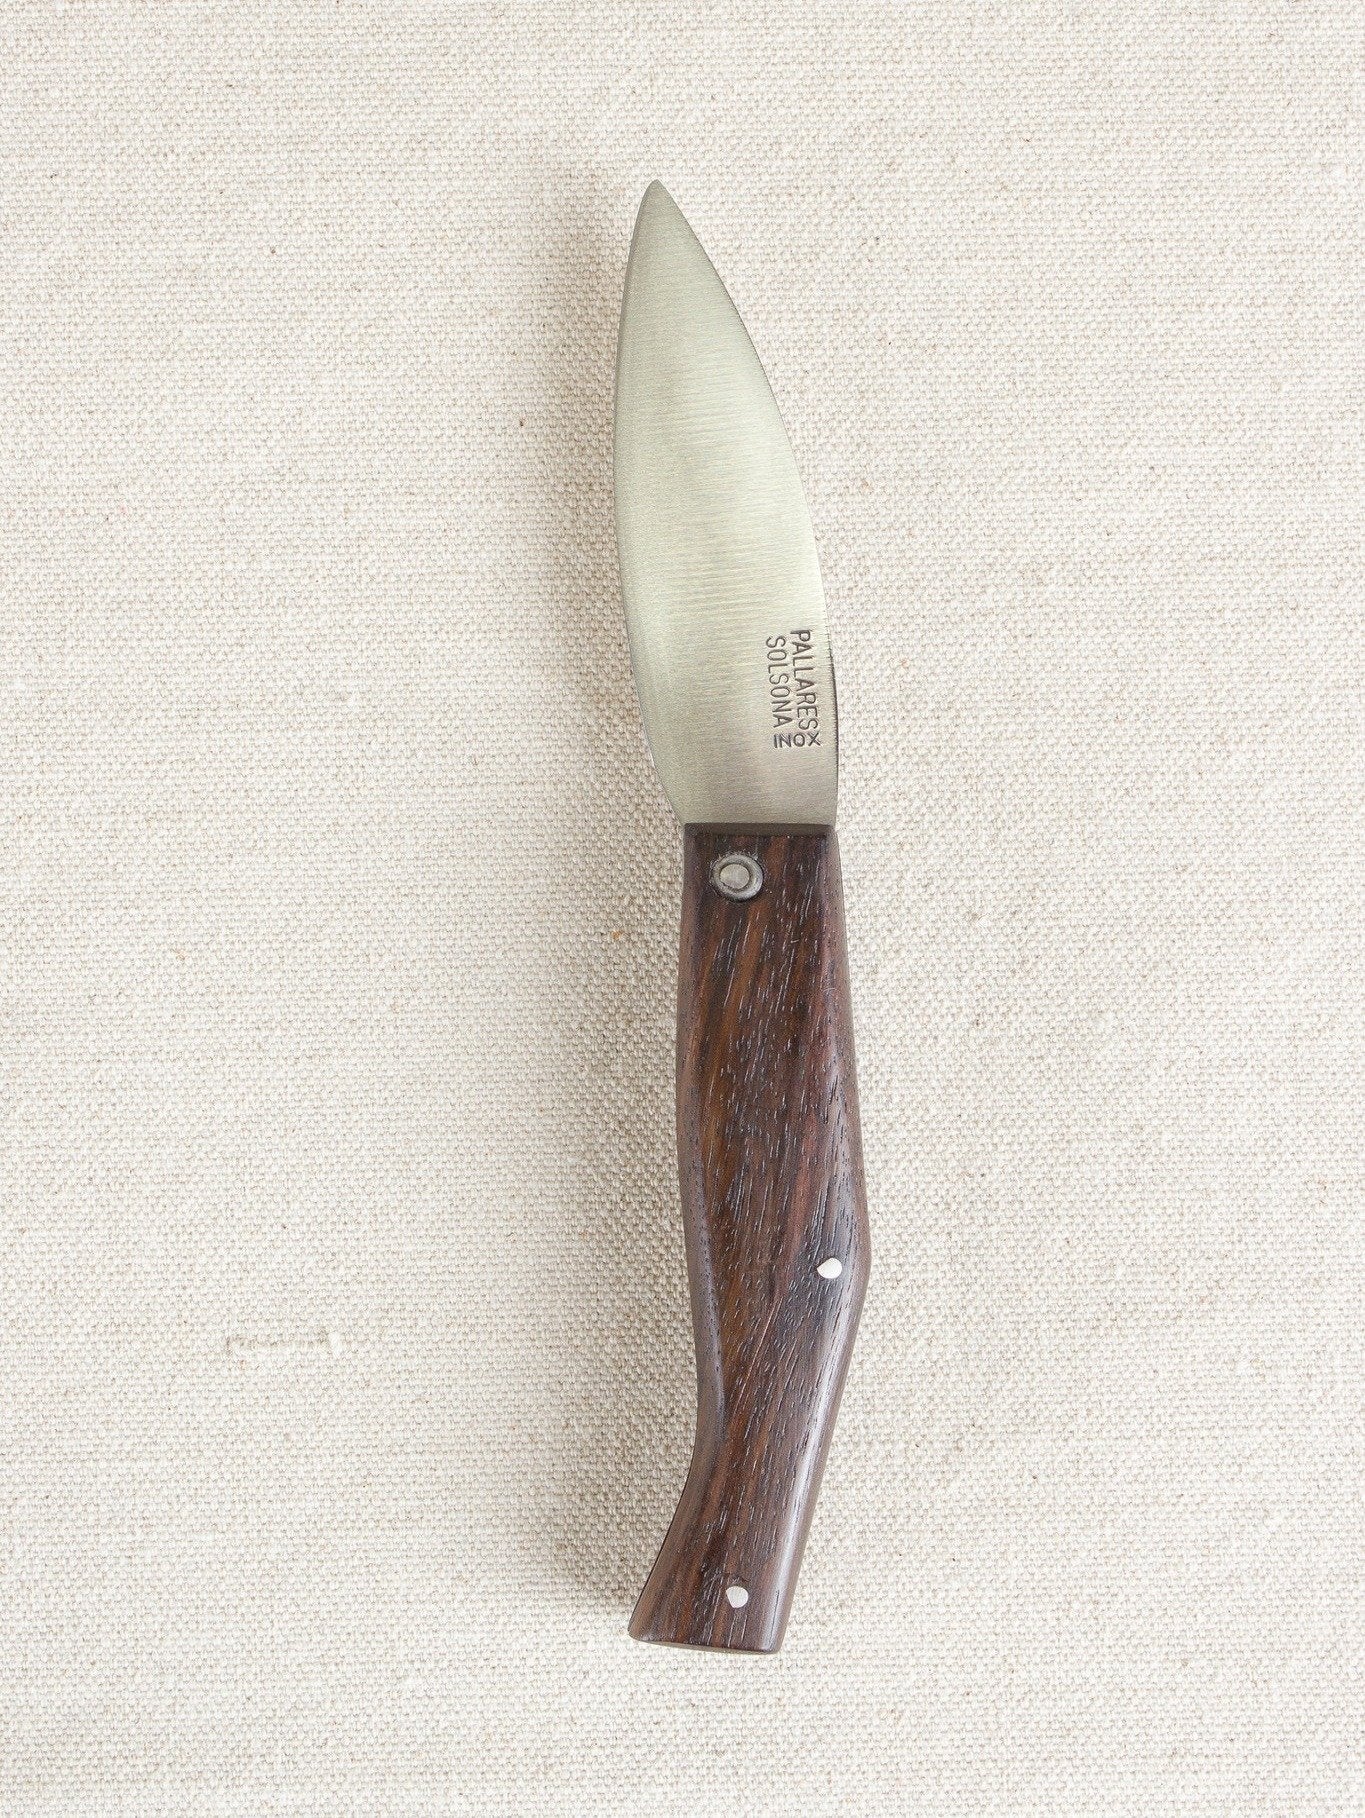 Rosewood Pocketknife